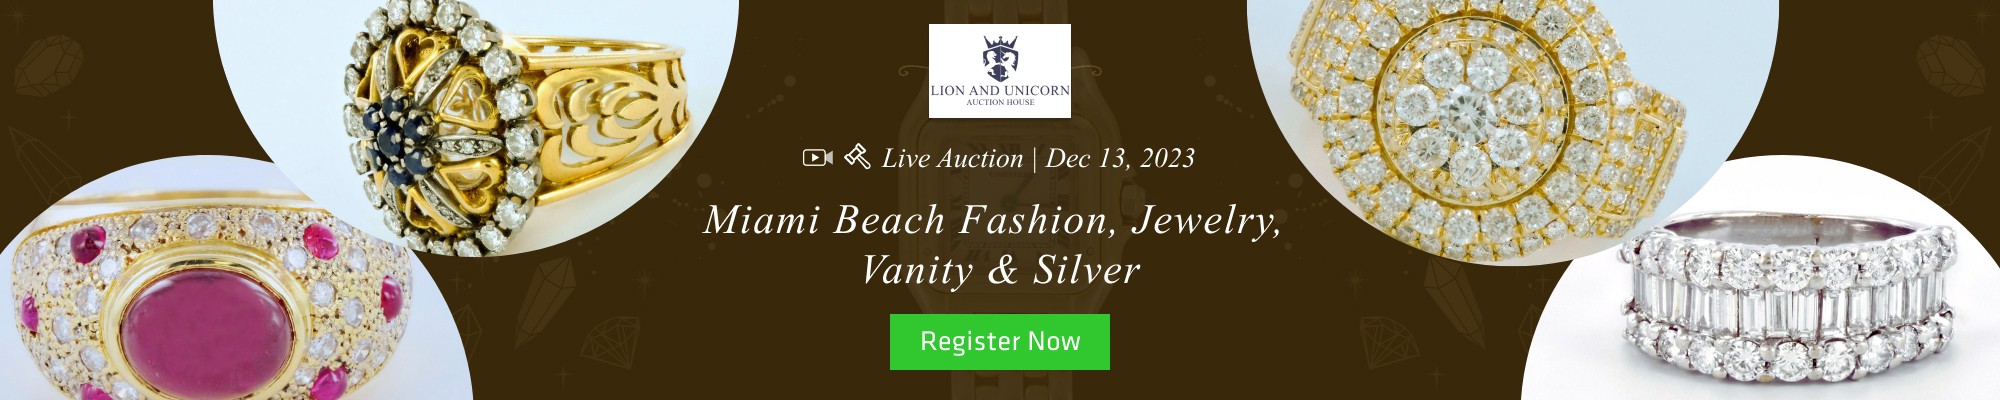 Miami Beach Fashion, Jewelry, Vanity & Silver